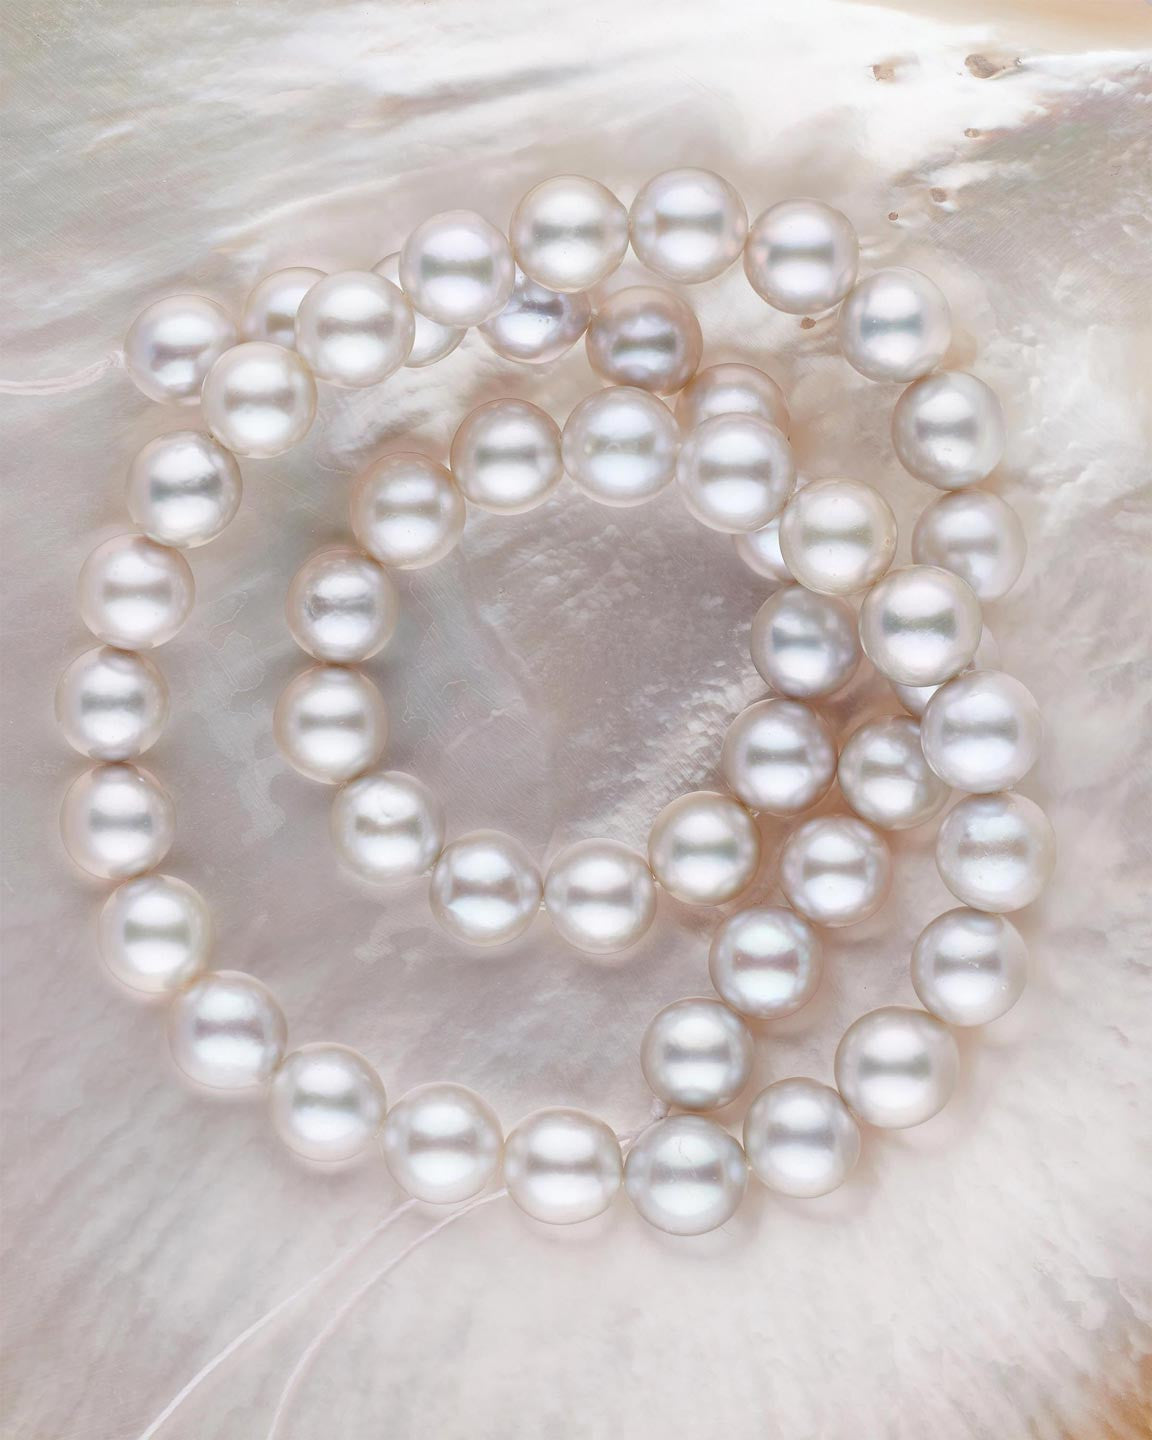 Red Sea pearls on Pinctada maxima shell